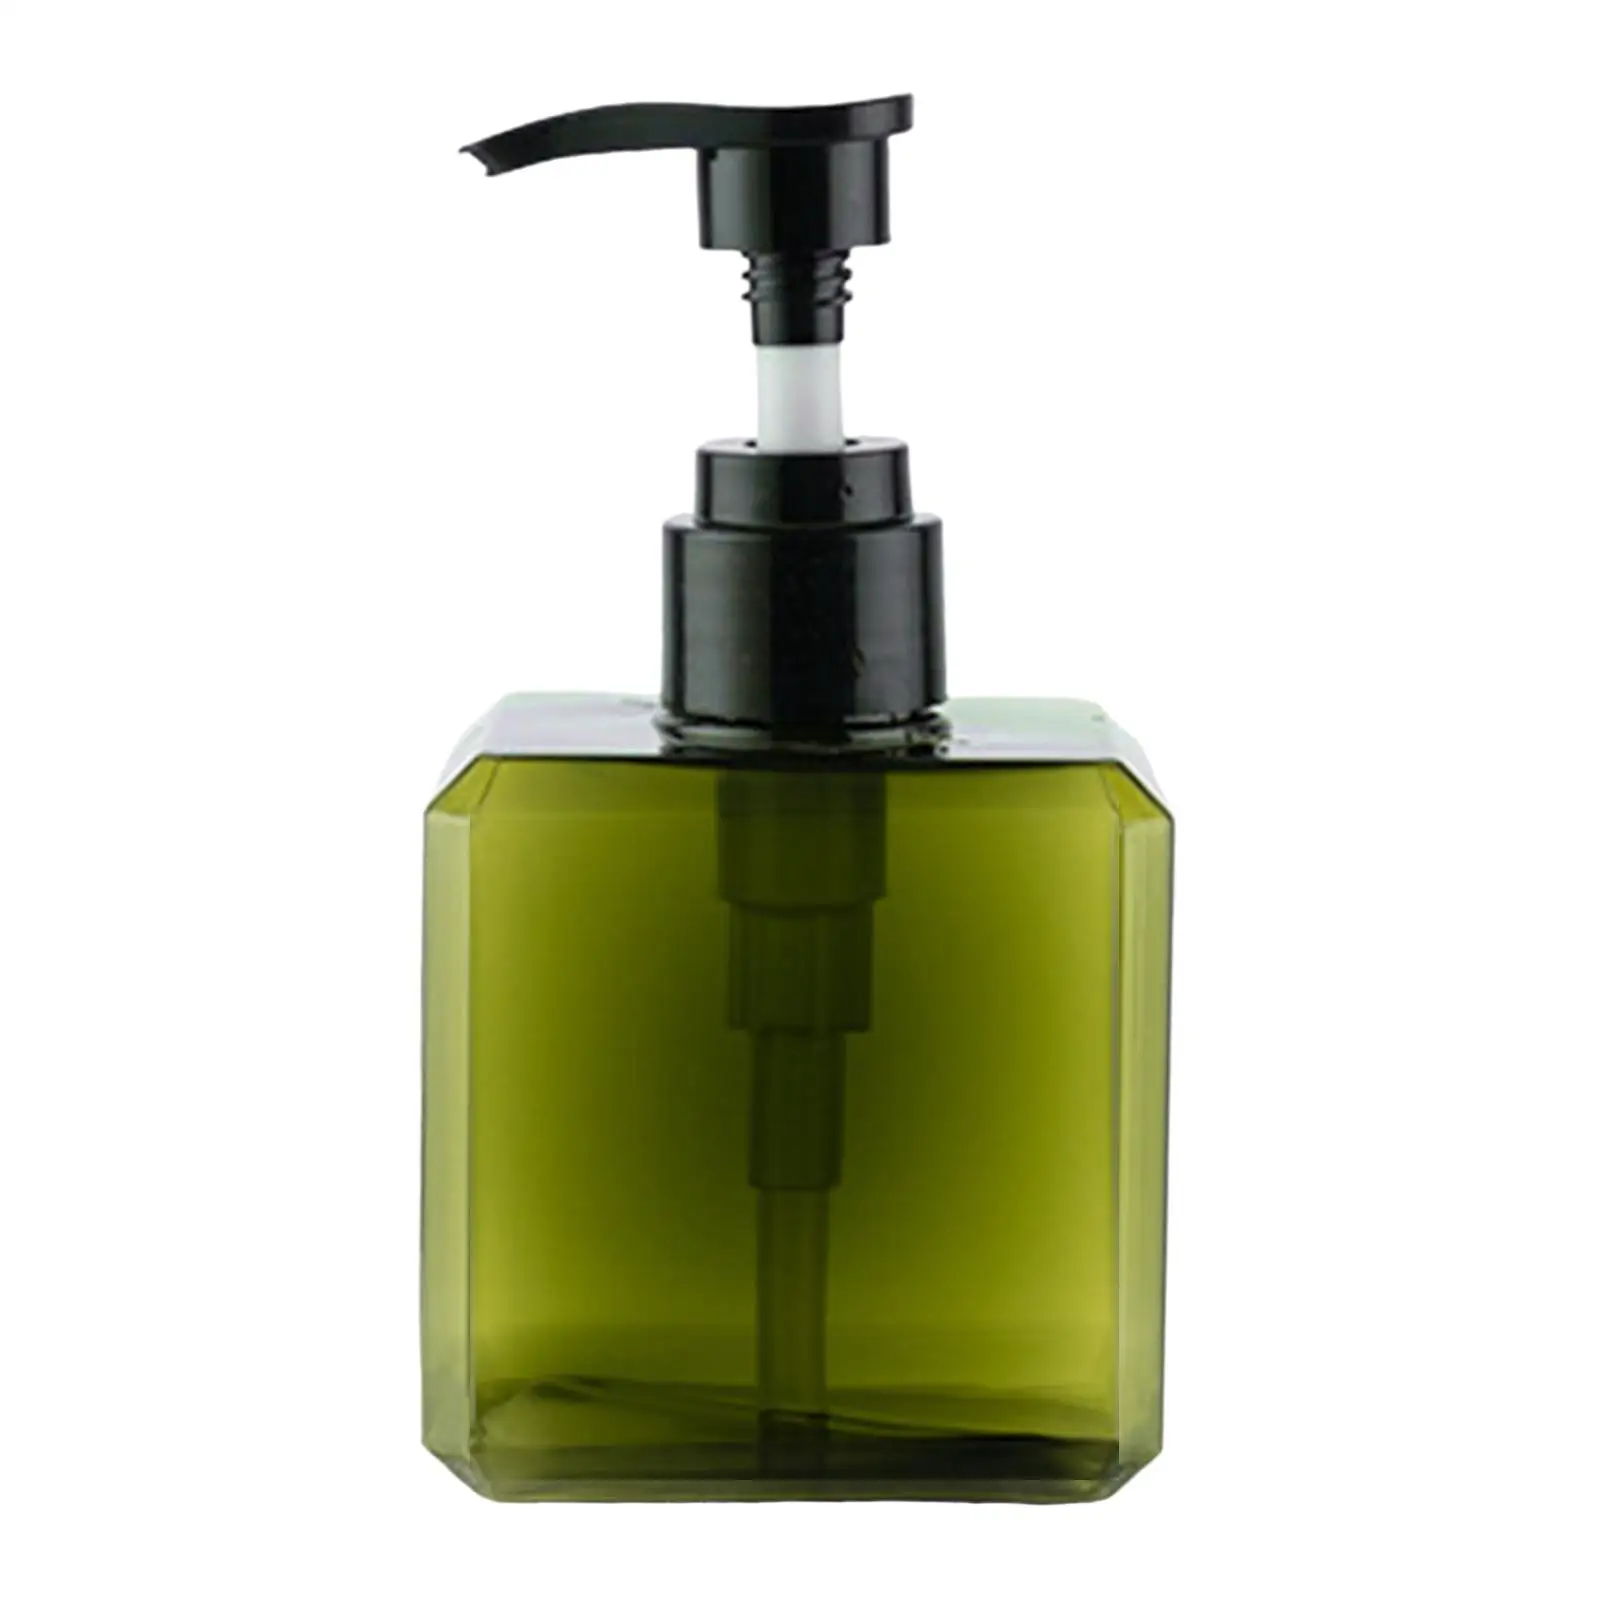 1x Soap Dispenser Empty Bottle Liquid  Reusable Handwash Container for Hotel Tabletop Wash Room Shower  Hand Soap